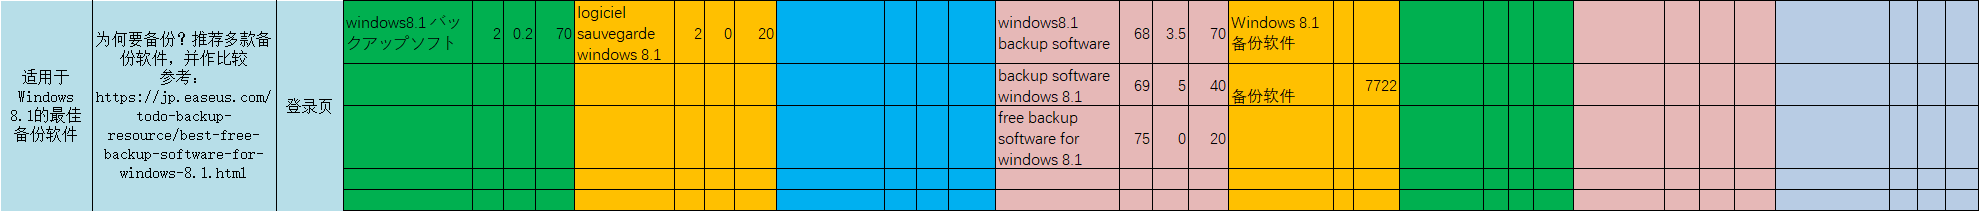 windows-8-1-backup-software